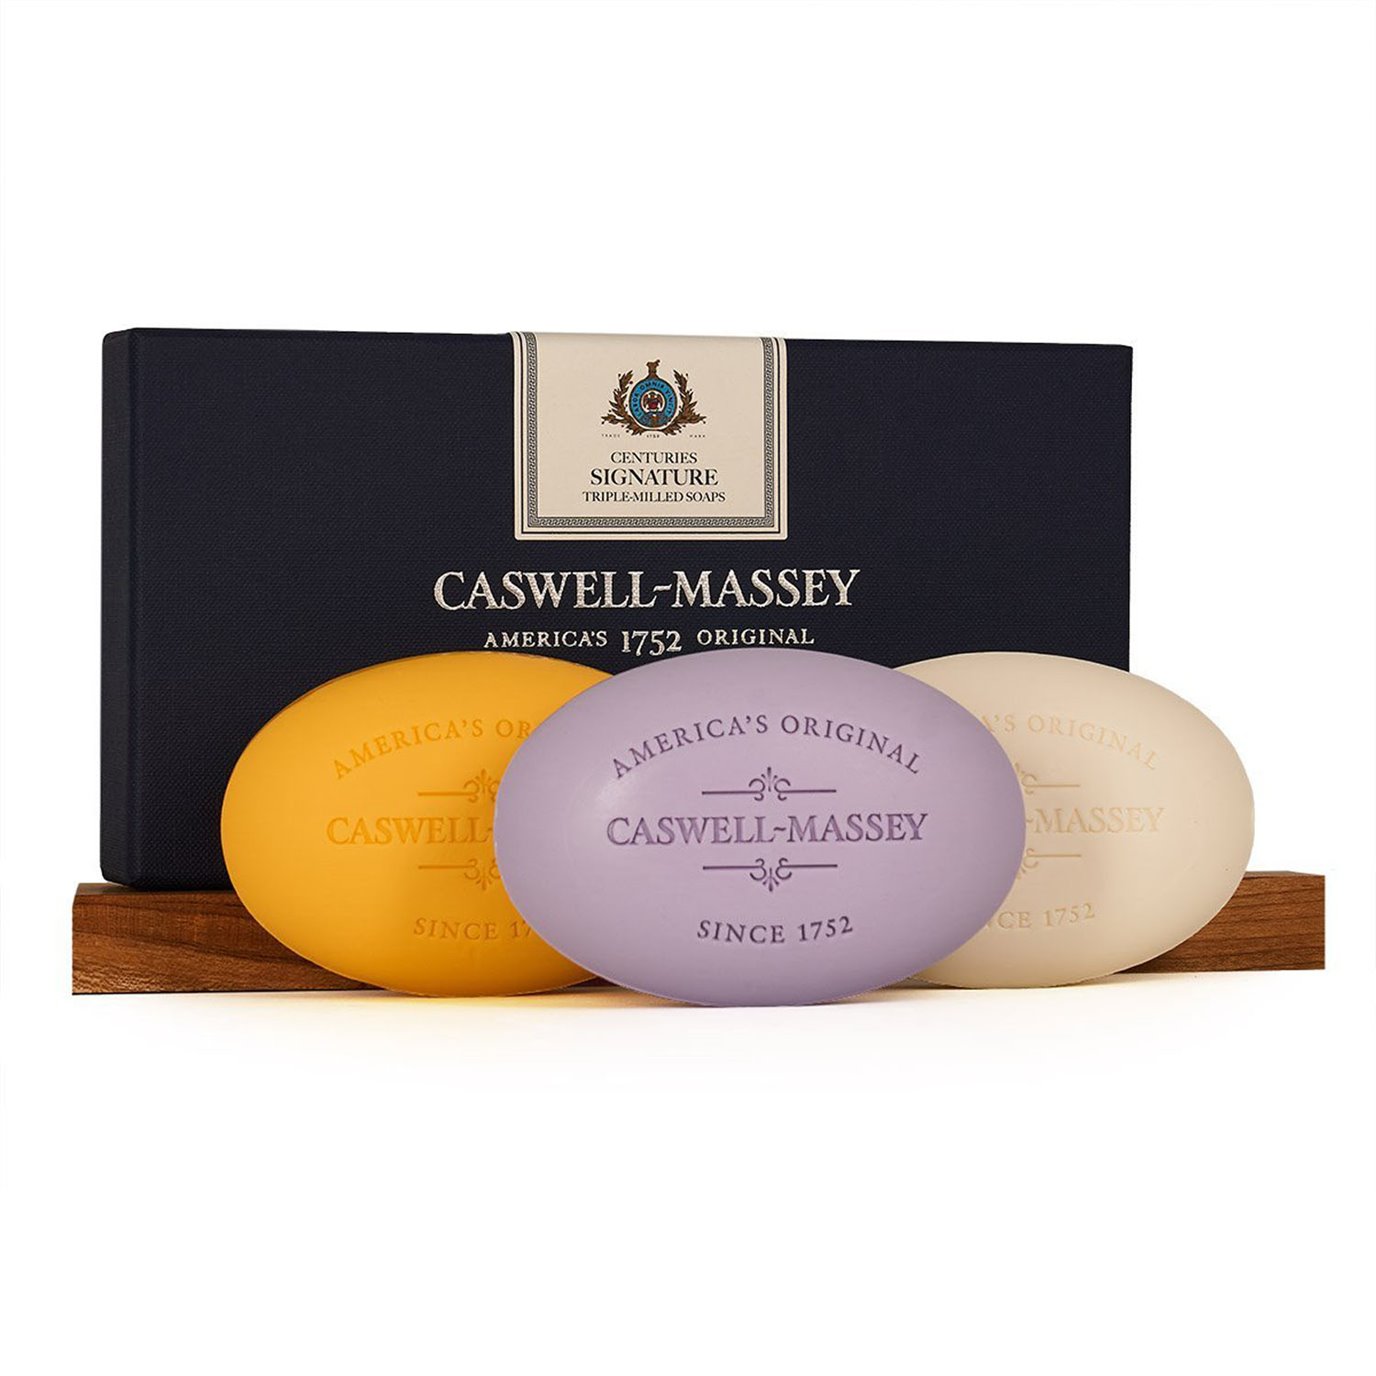 Caswell-Massey Signature Bar Soap Assortment (3 x 5.8 oz., 165g)